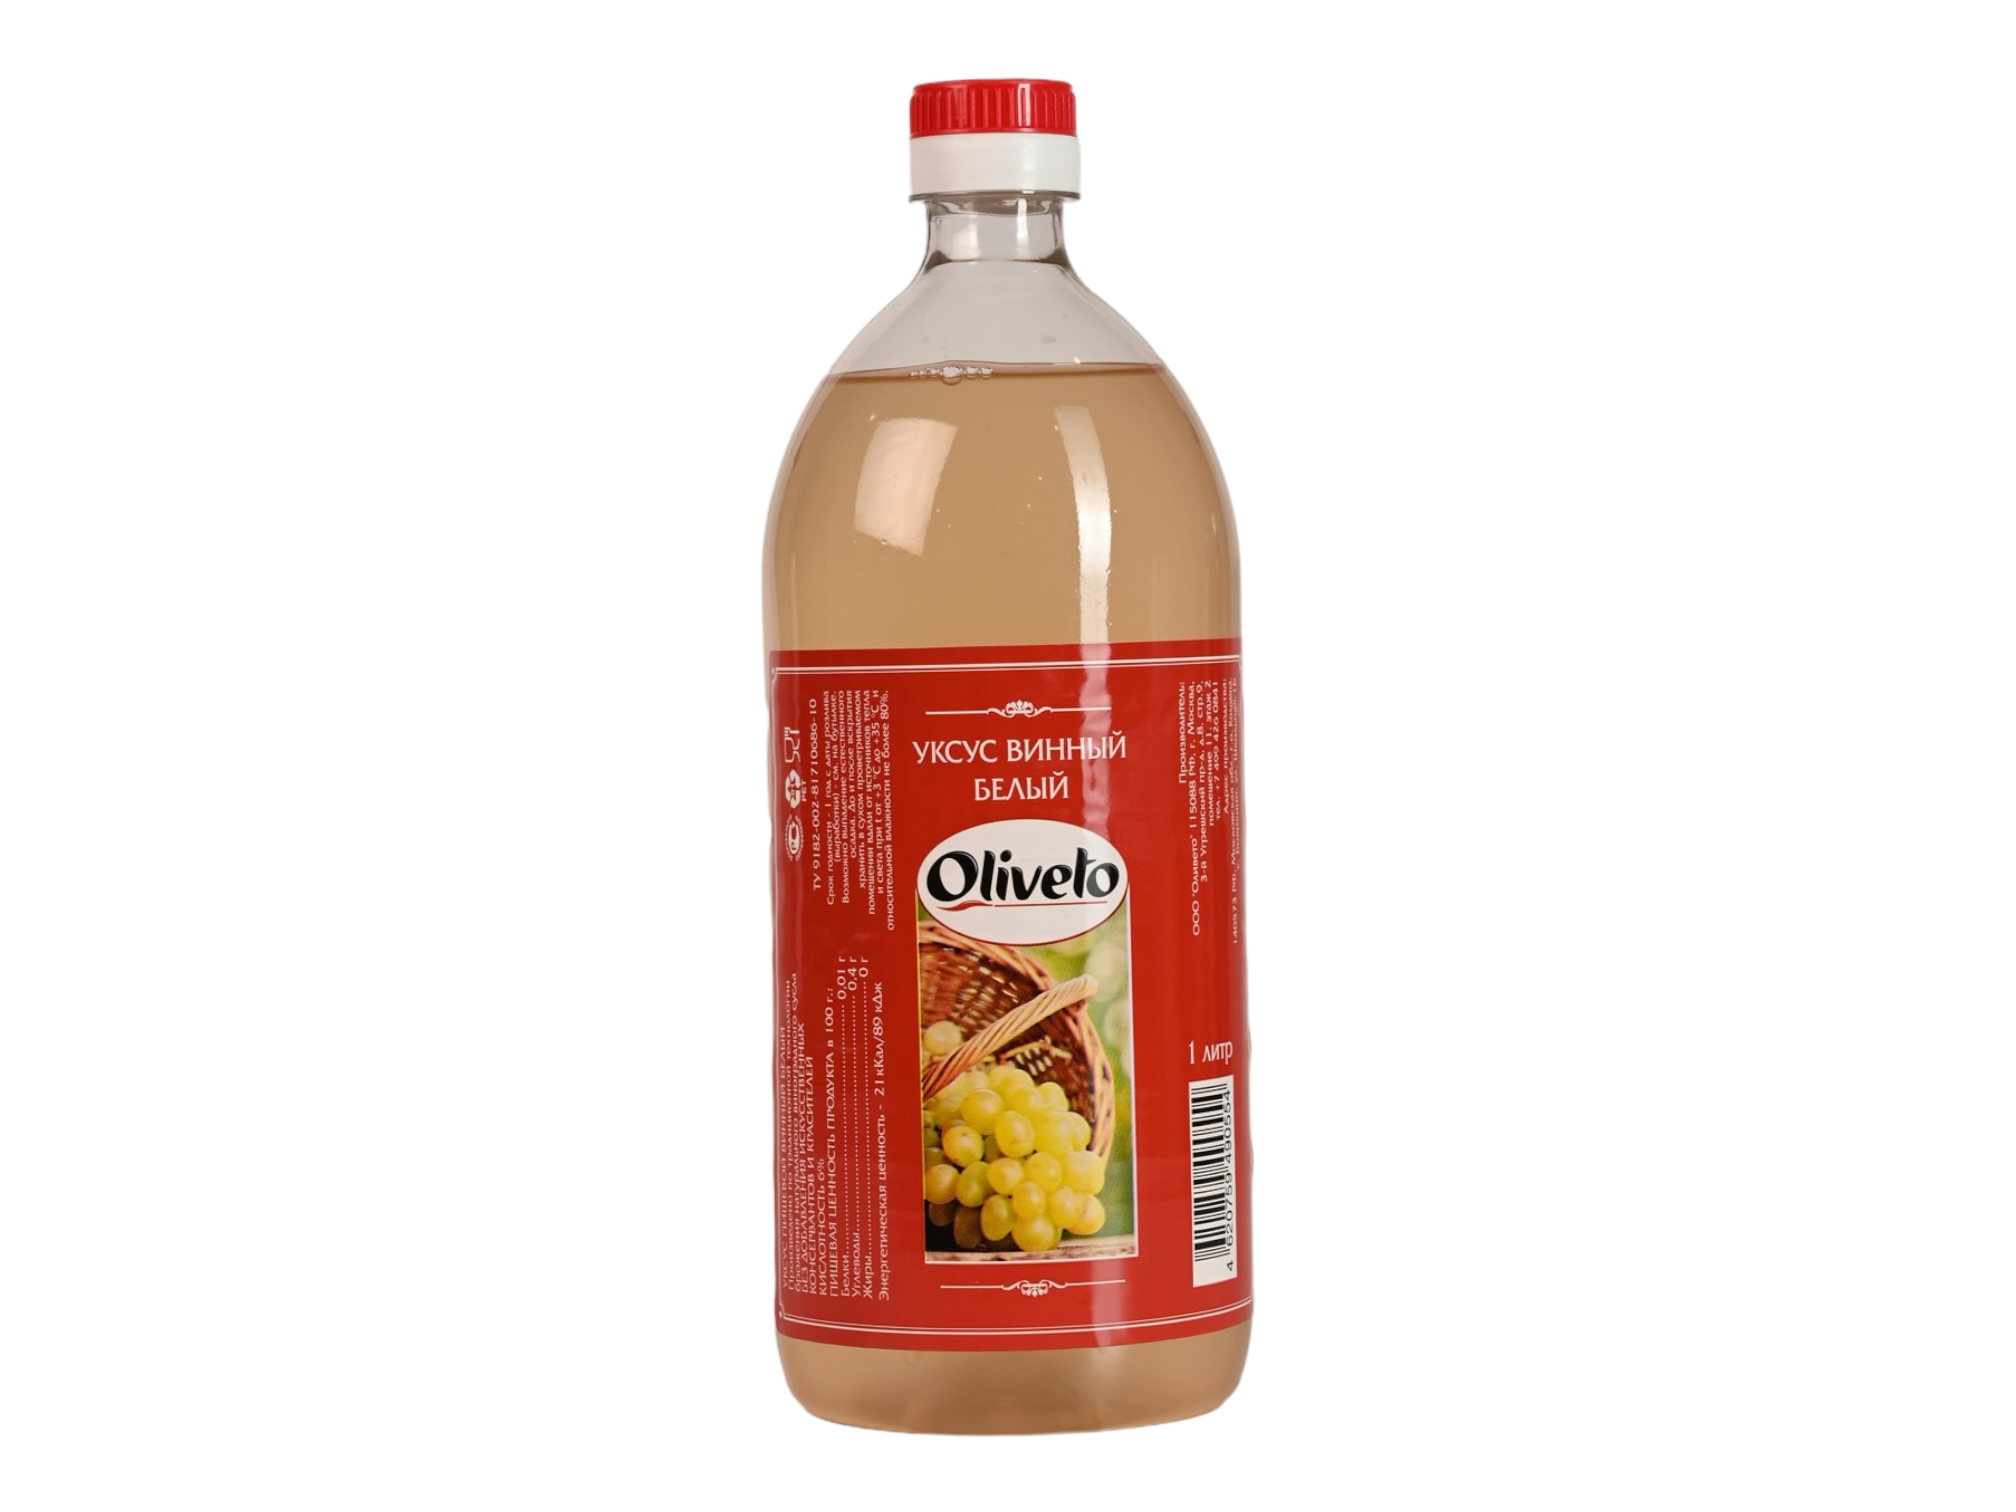 картинка Уксус винный белый "Oliveto"  (1л) от ТД Гурман